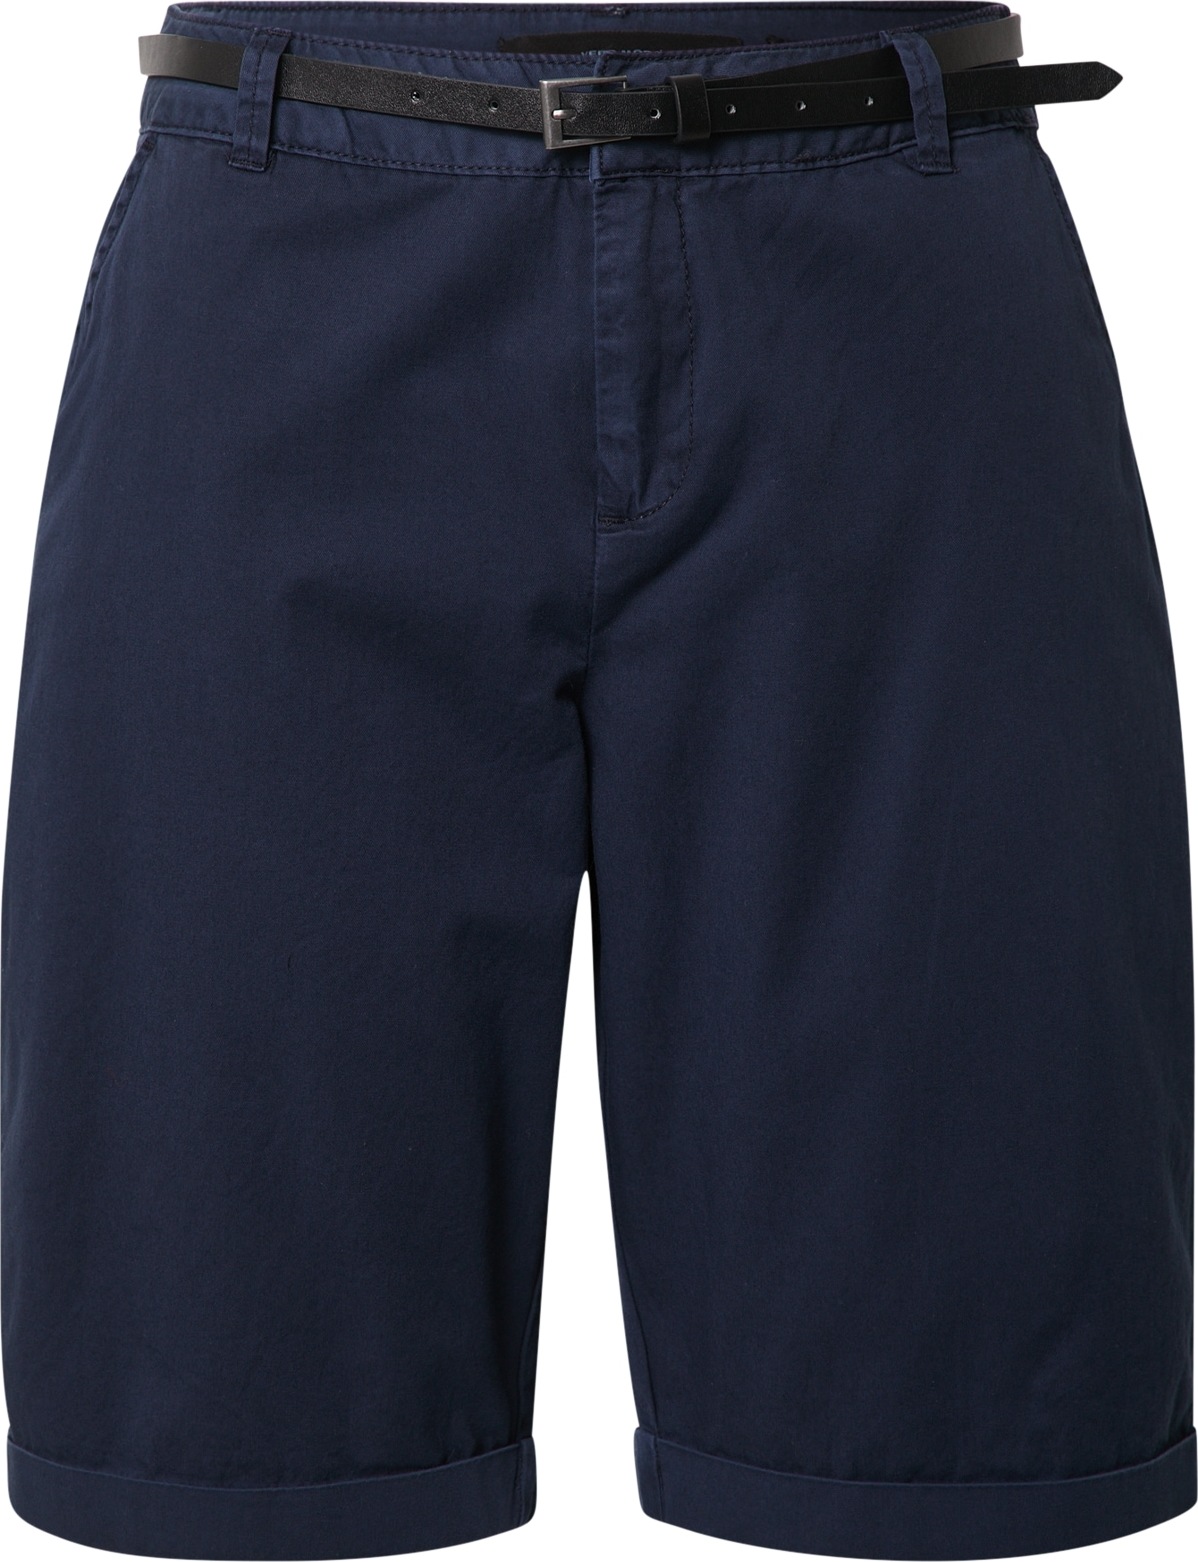 Chino kalhoty 'FLASH' Vero Moda námořnická modř